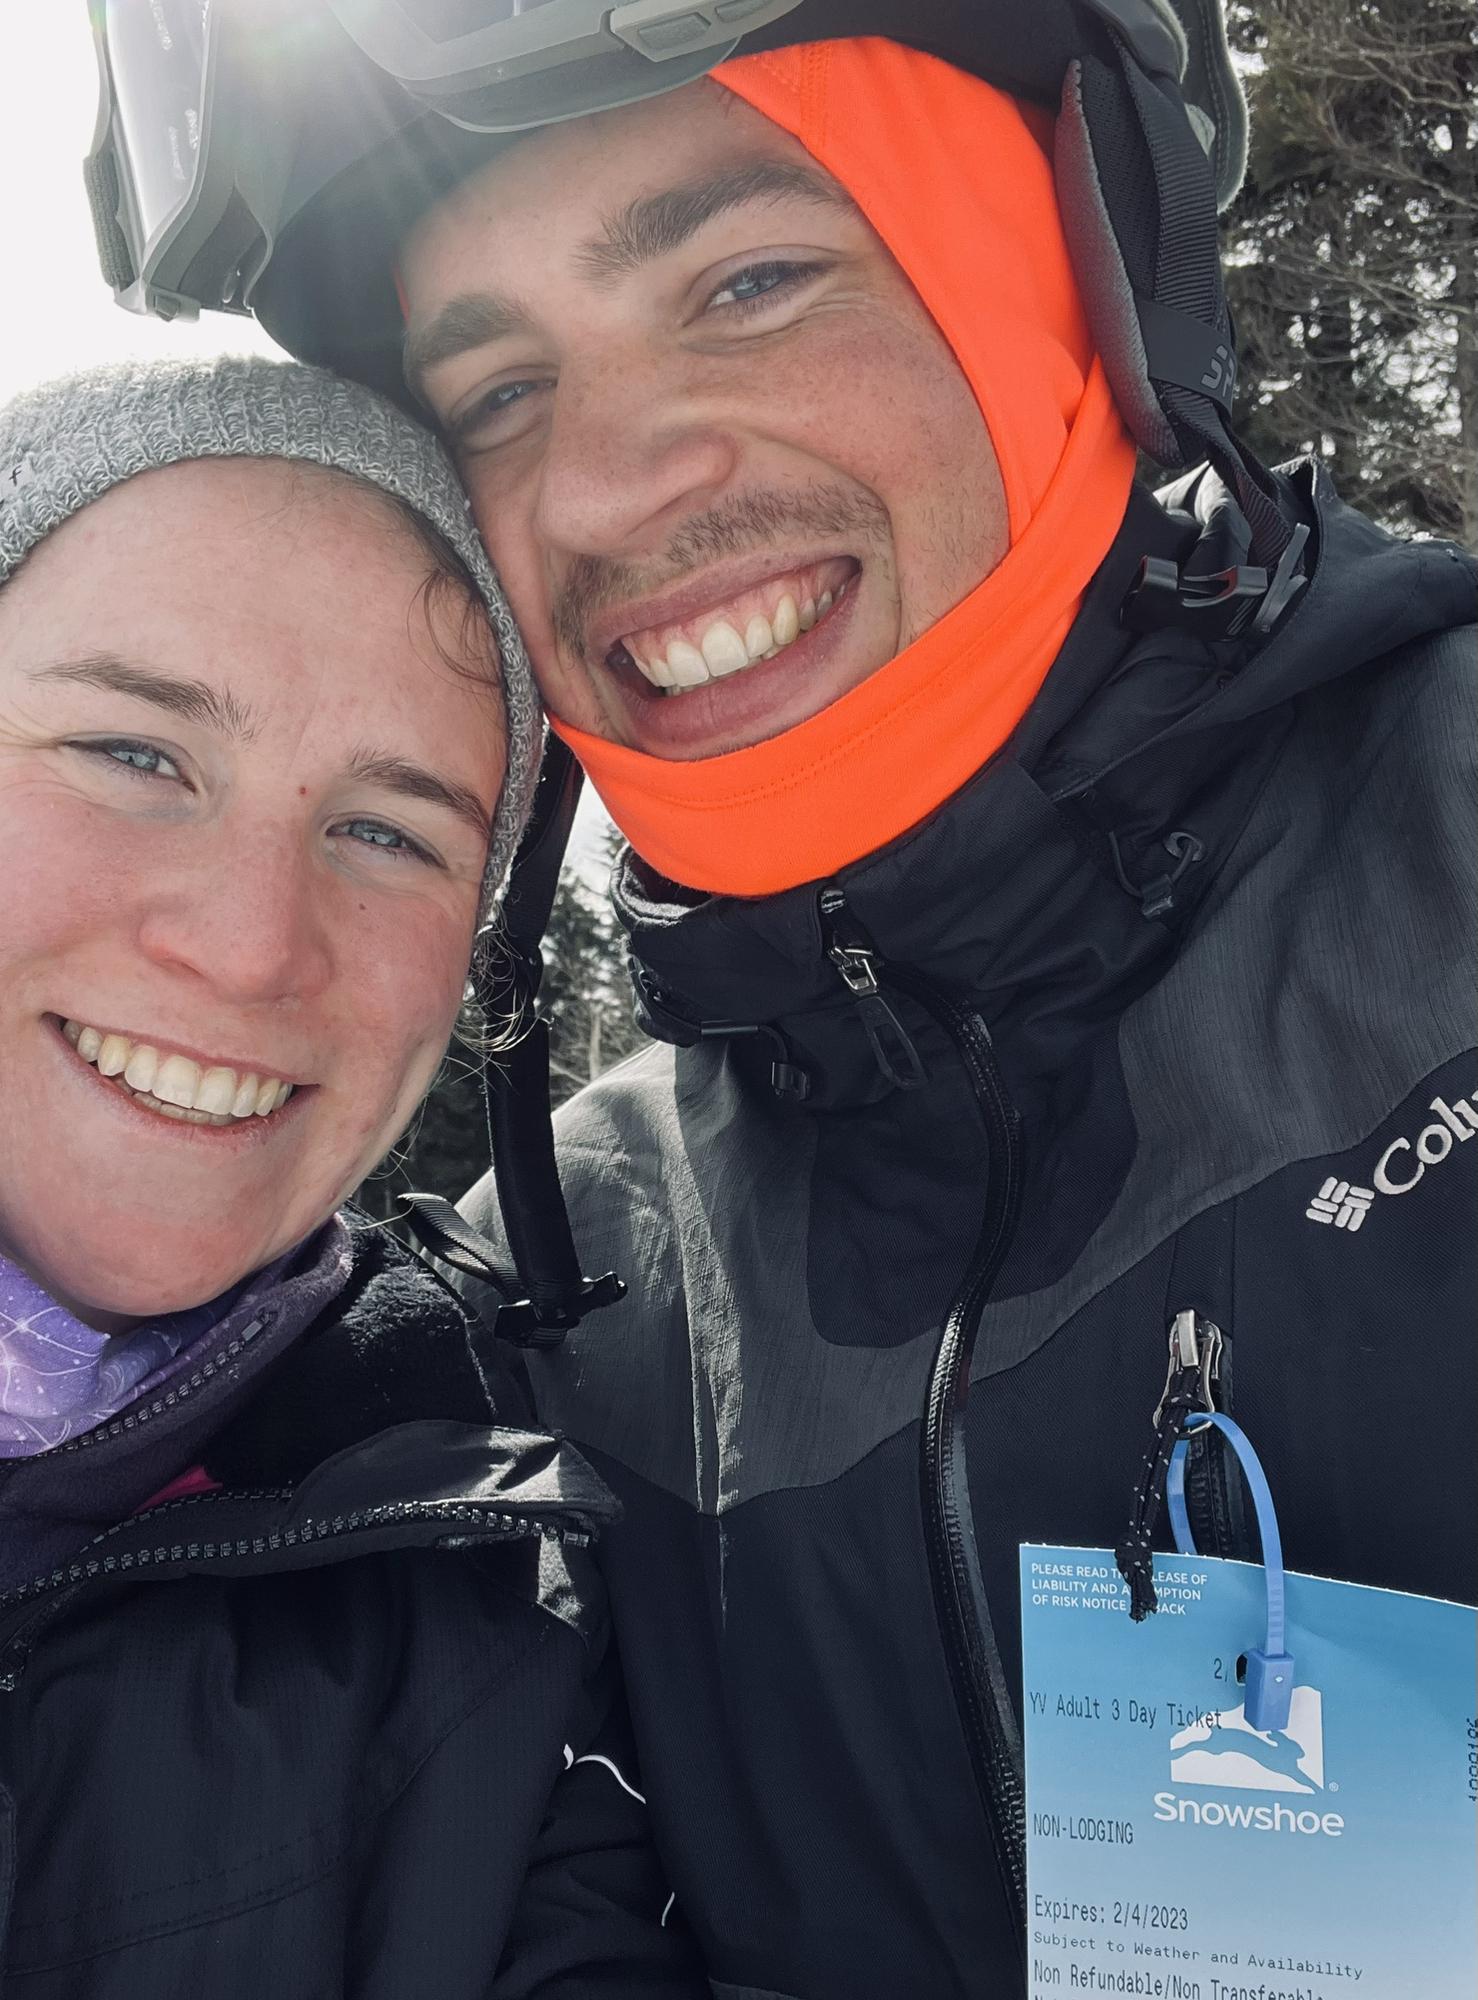 Post-proposal selfie in Snowshoe Mountain, West Virginia! ❤️ 
February 2023